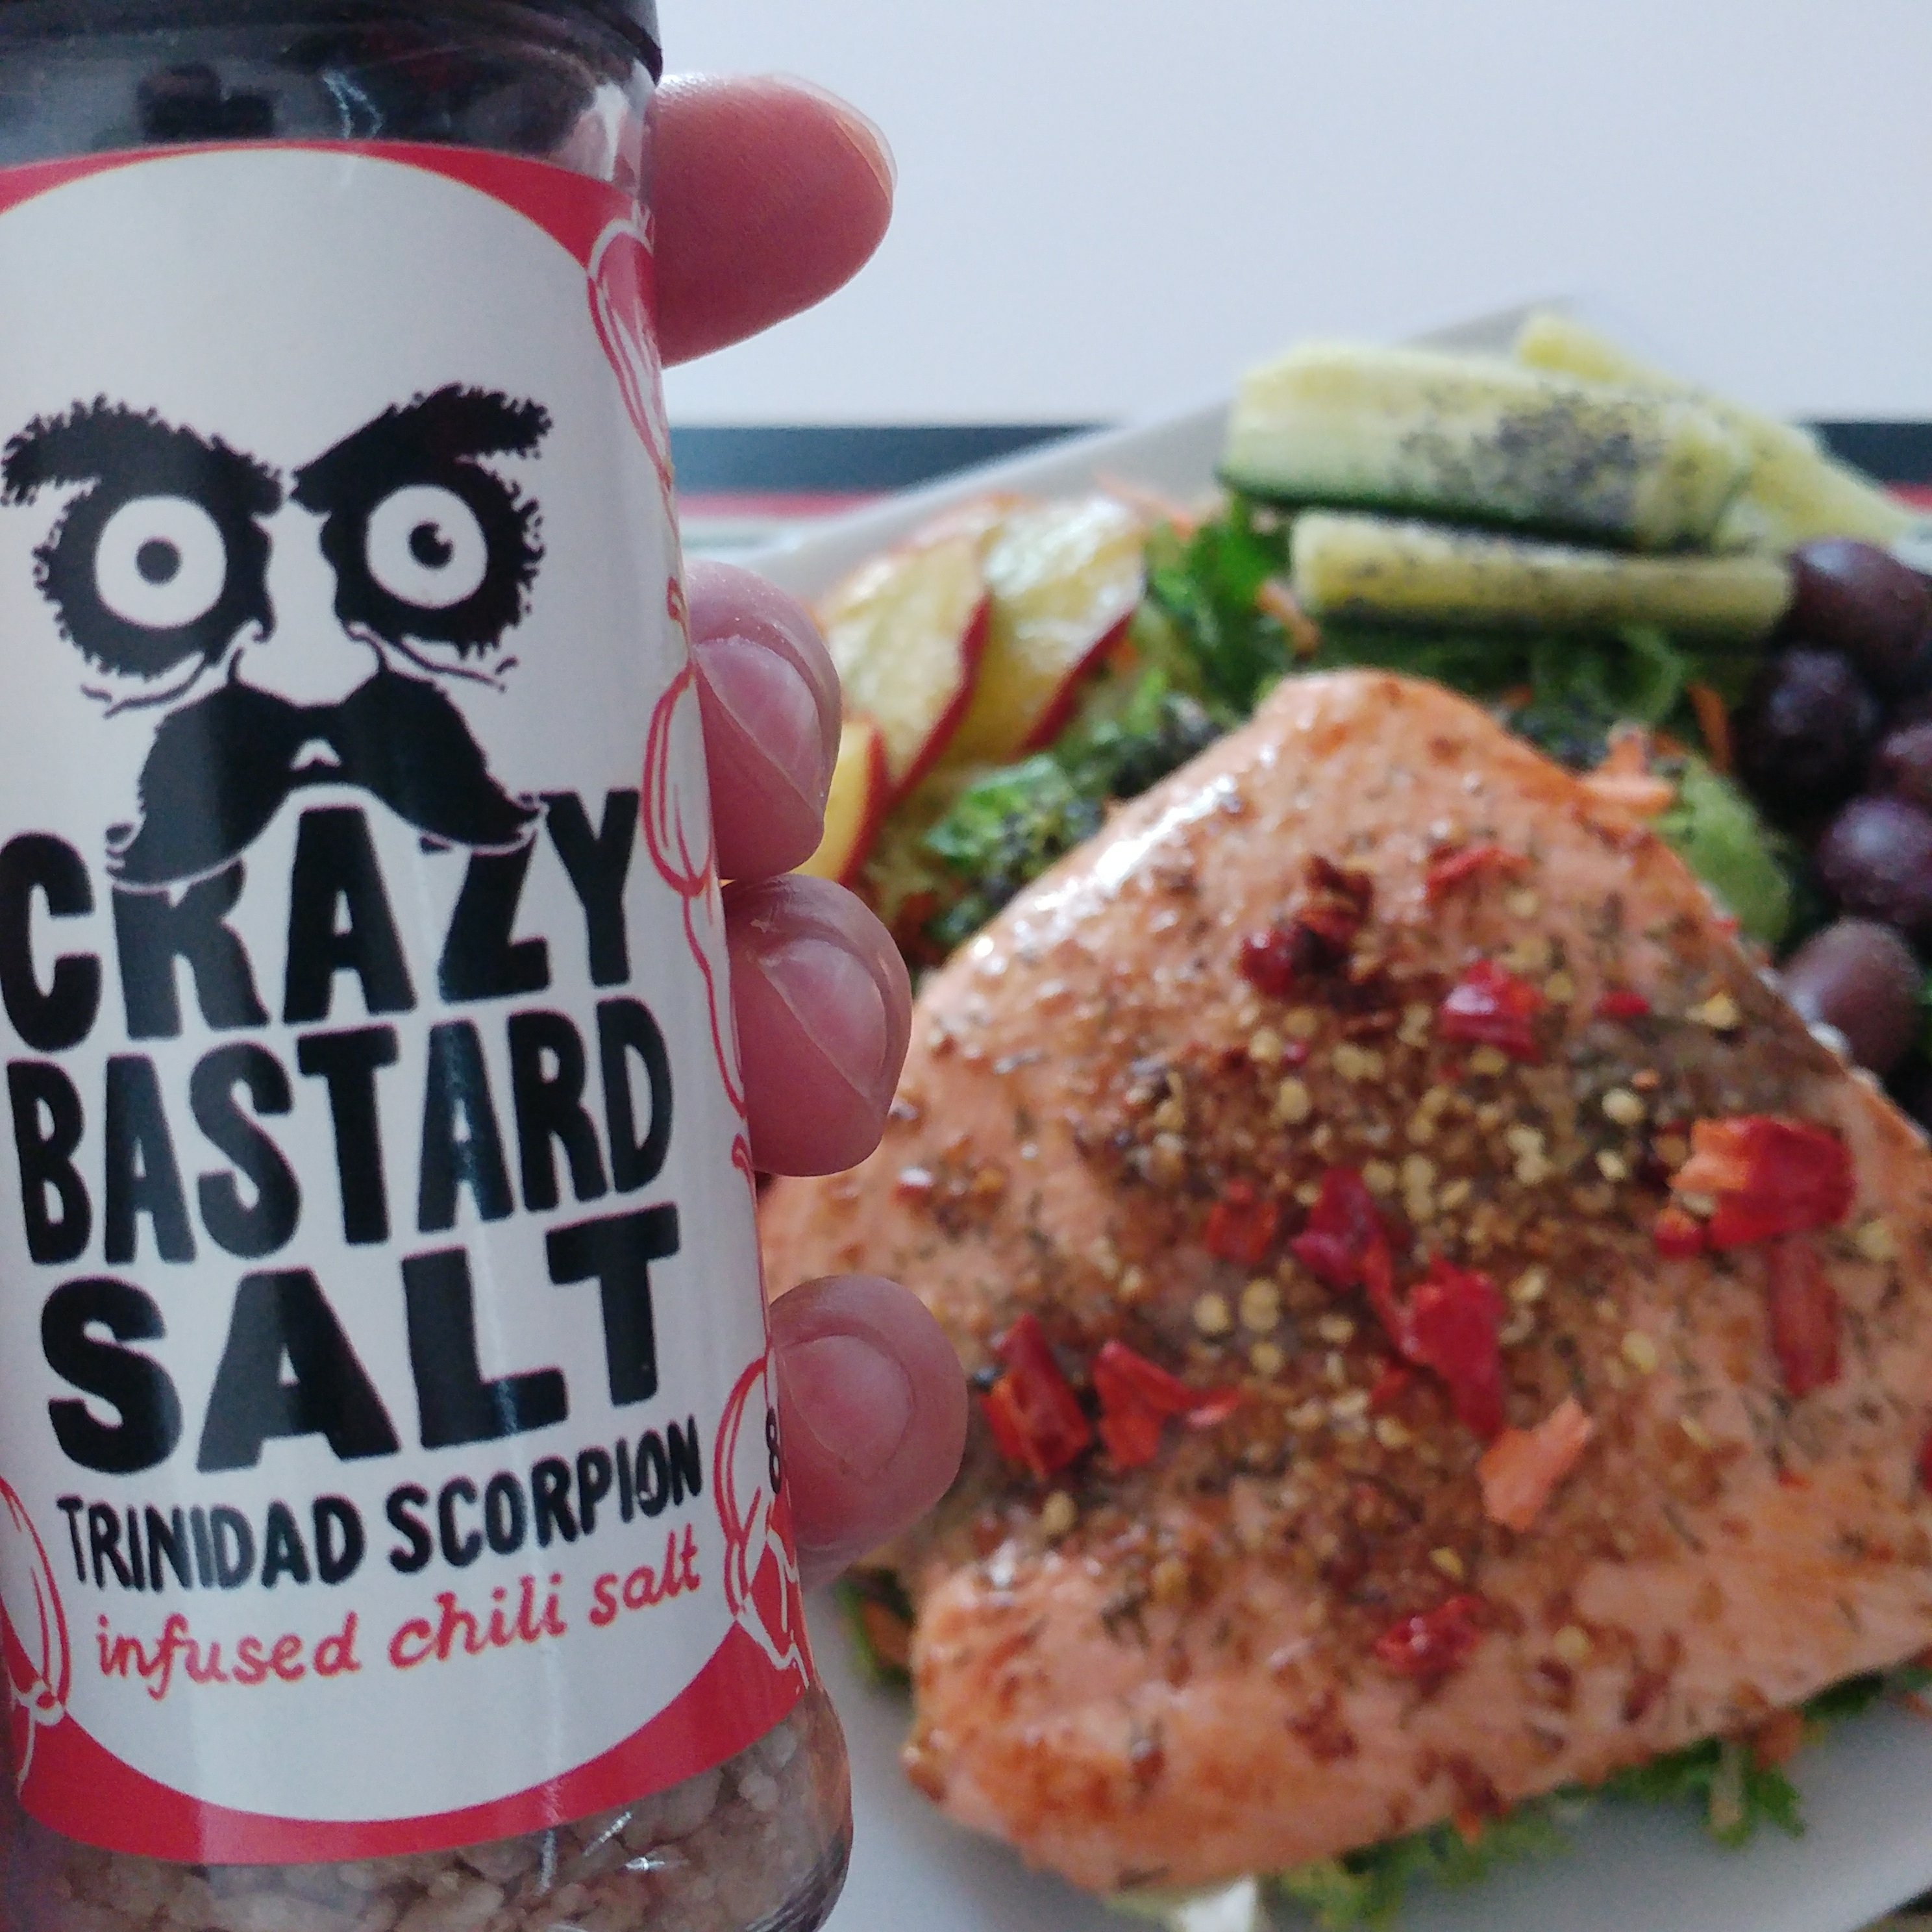 Crazy Bastard Salt ! Trinidad Scorpion, infused chili salt !!!